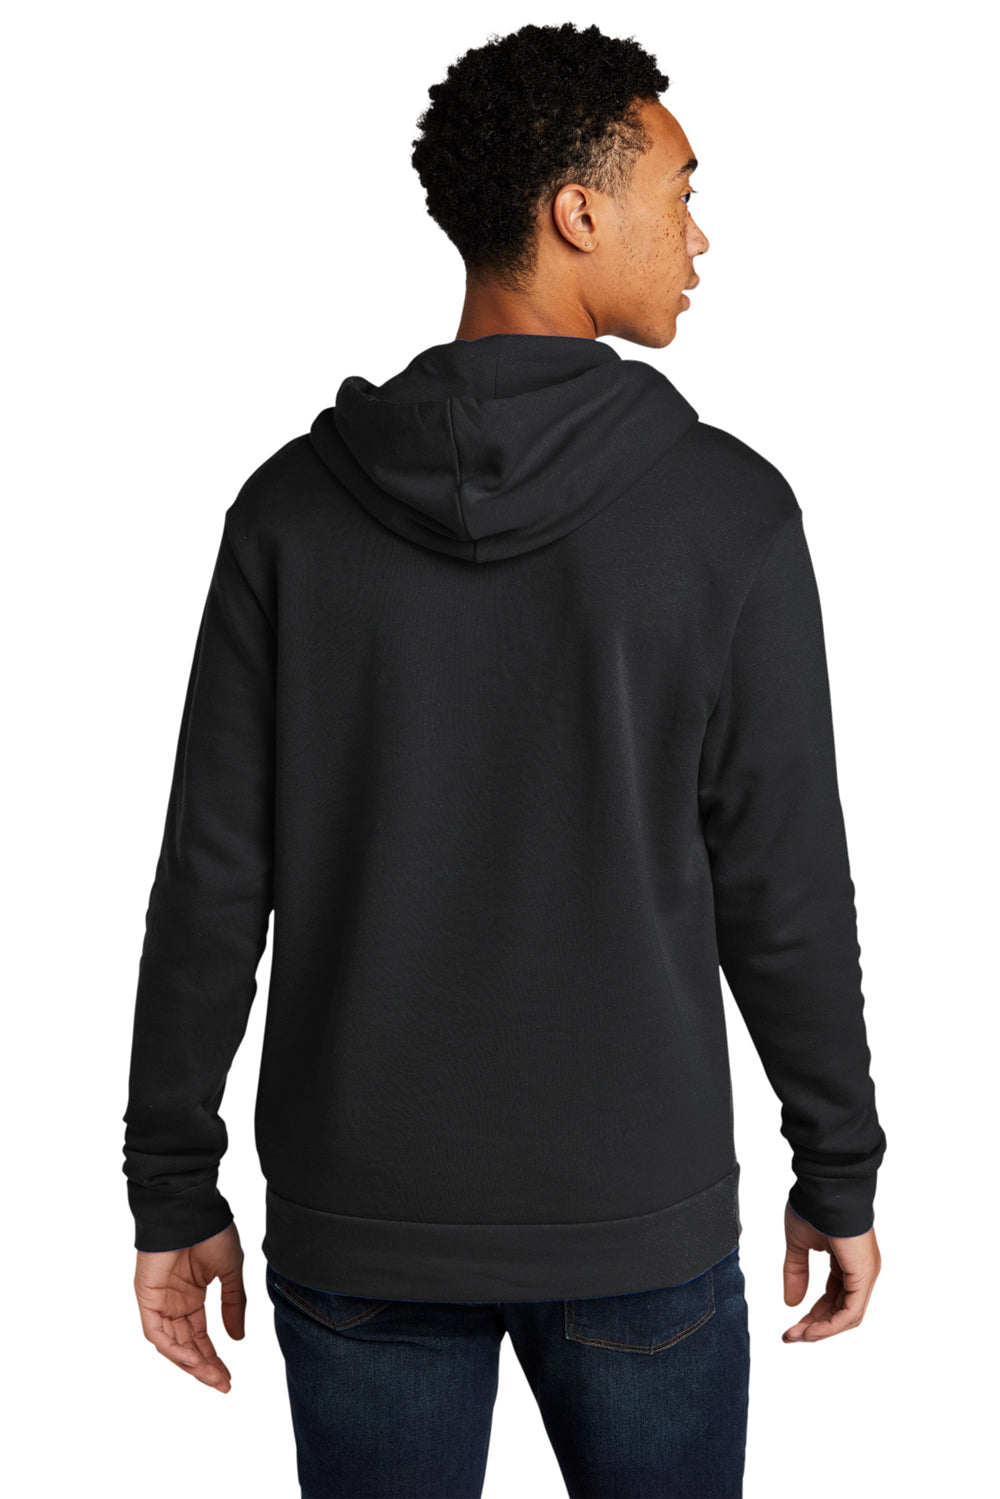 Next Level NL9303/9303 Mens Fleece Hooded Sweatshirt Hoodie Graphite Black Back